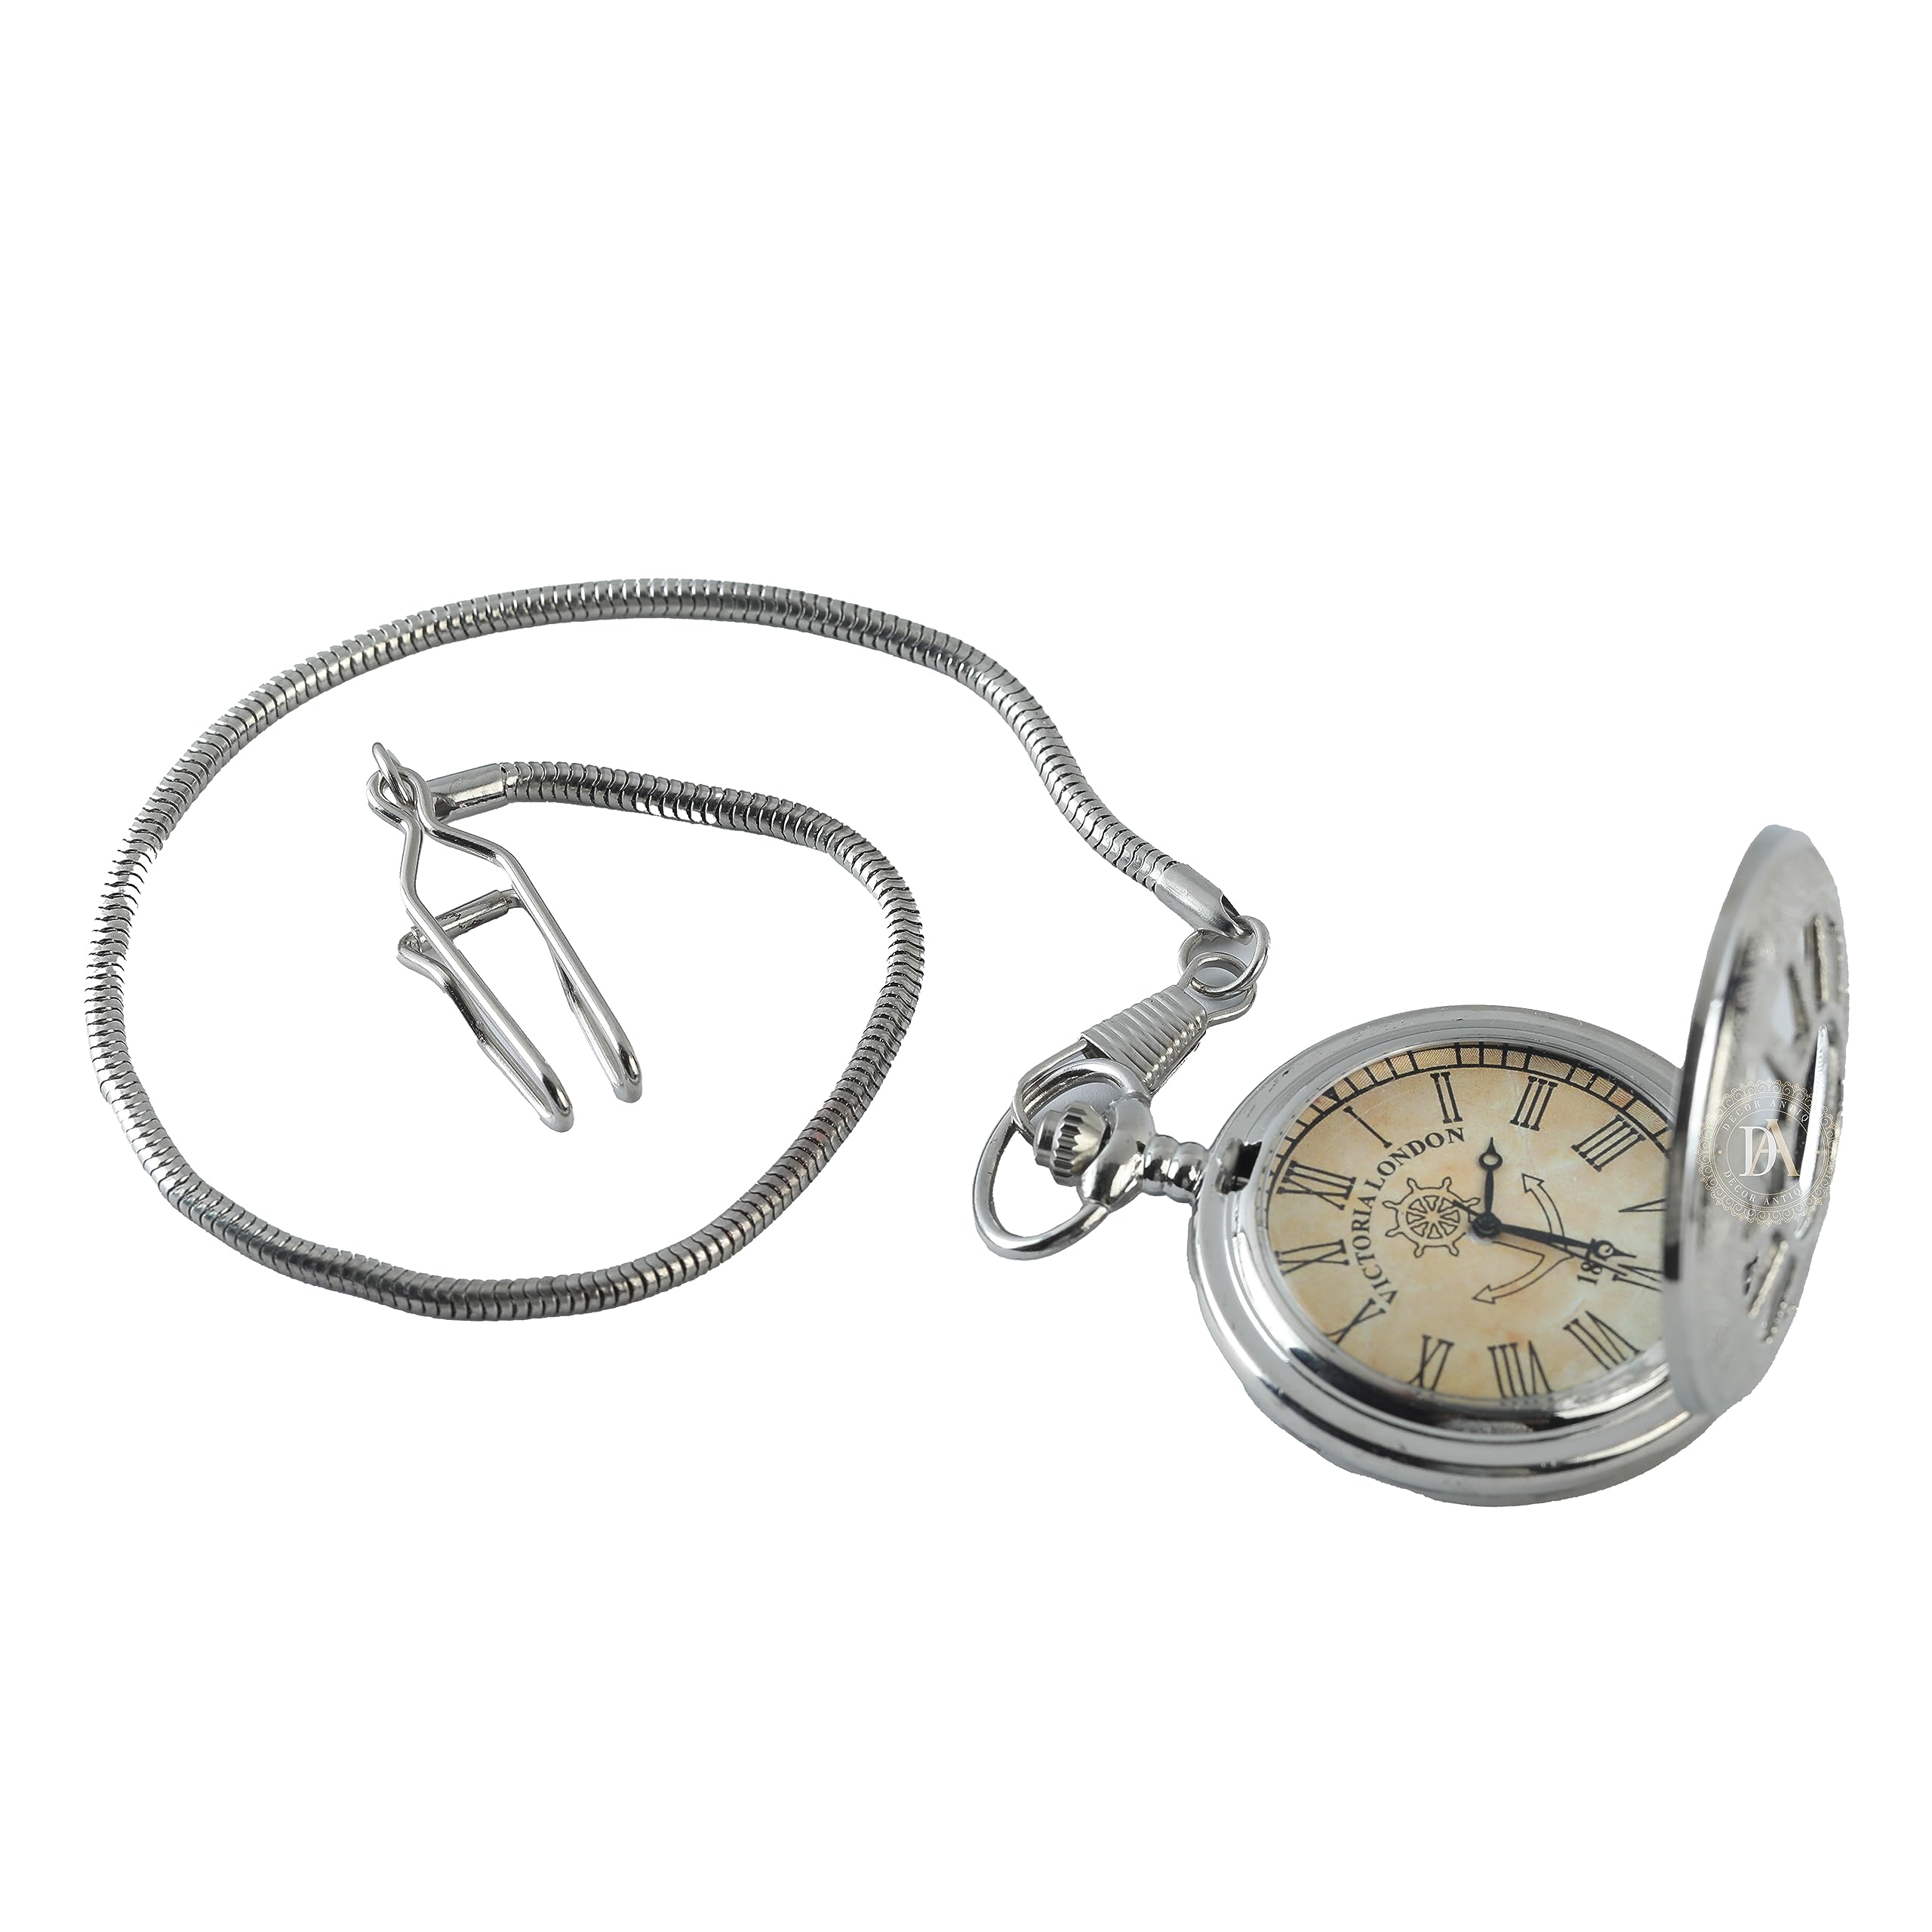 Vintage Pocket Watch Roman Numerals Scale Quartz Pocket Watch with Chain for Men Women Birthday Gift Groomsmen Wedding Gift Christmas Gift